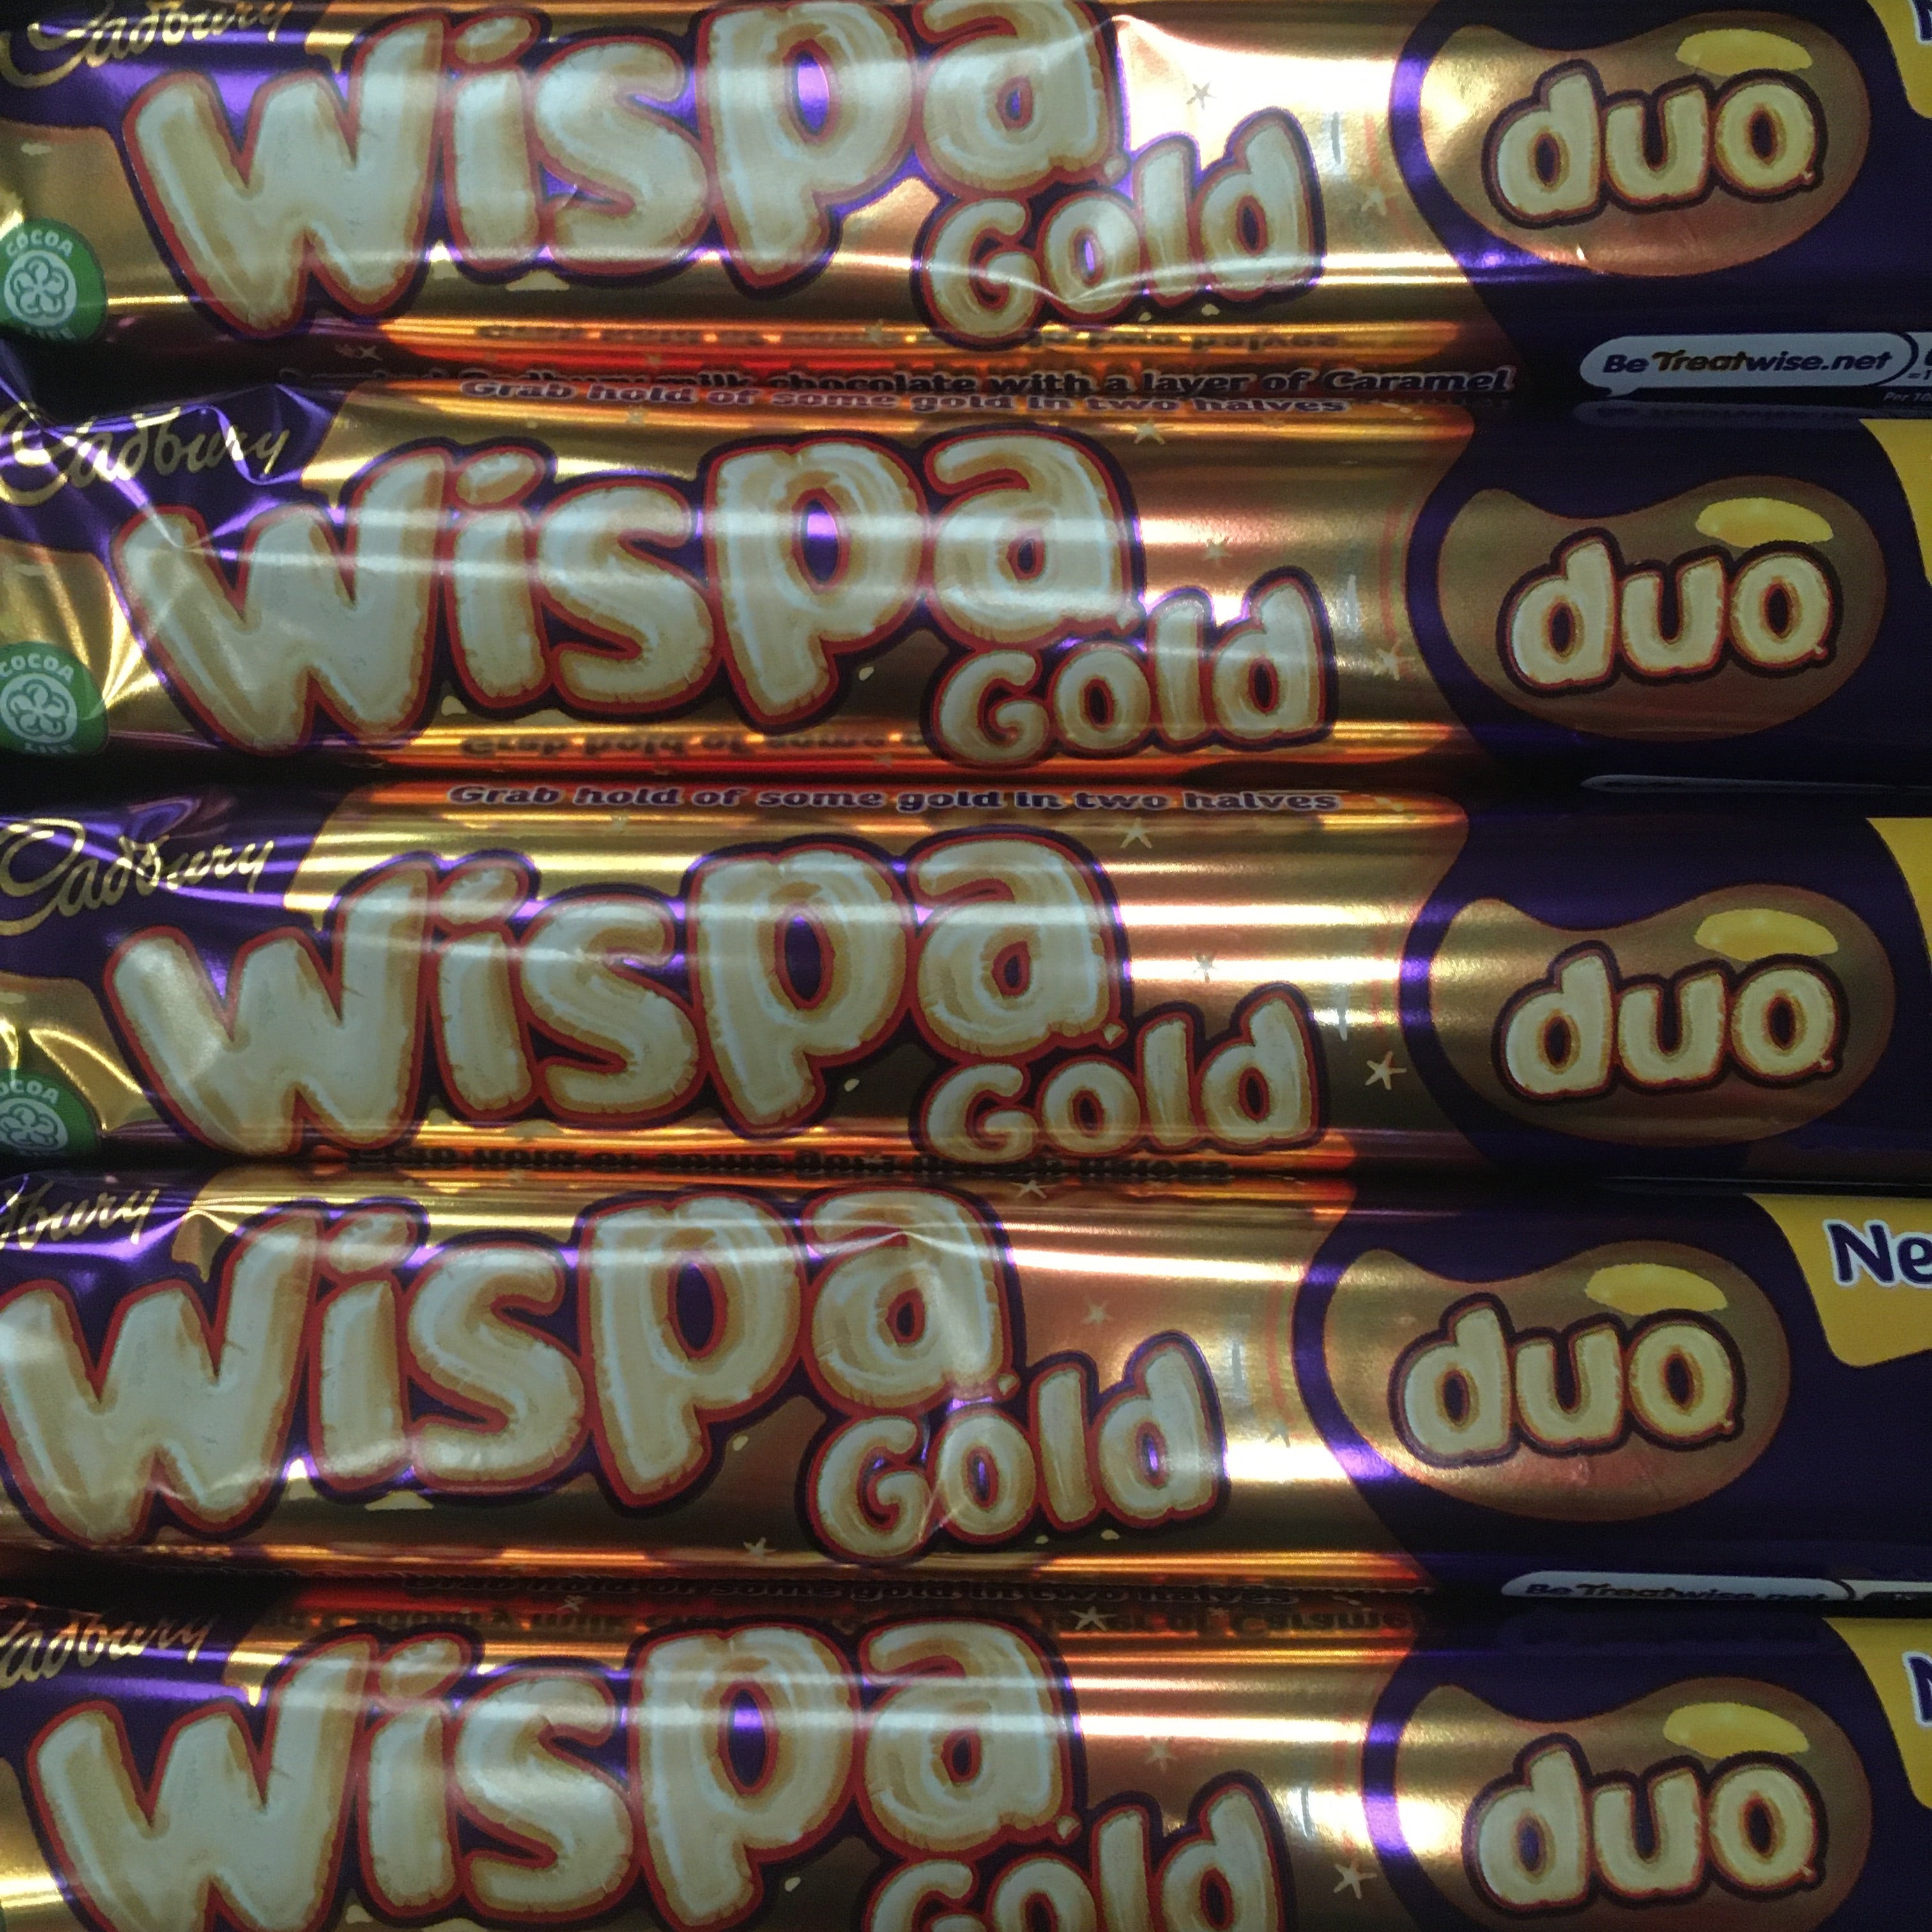 12x Cadbury Wispa Gold Duo Chocolate Bar (12x72g)